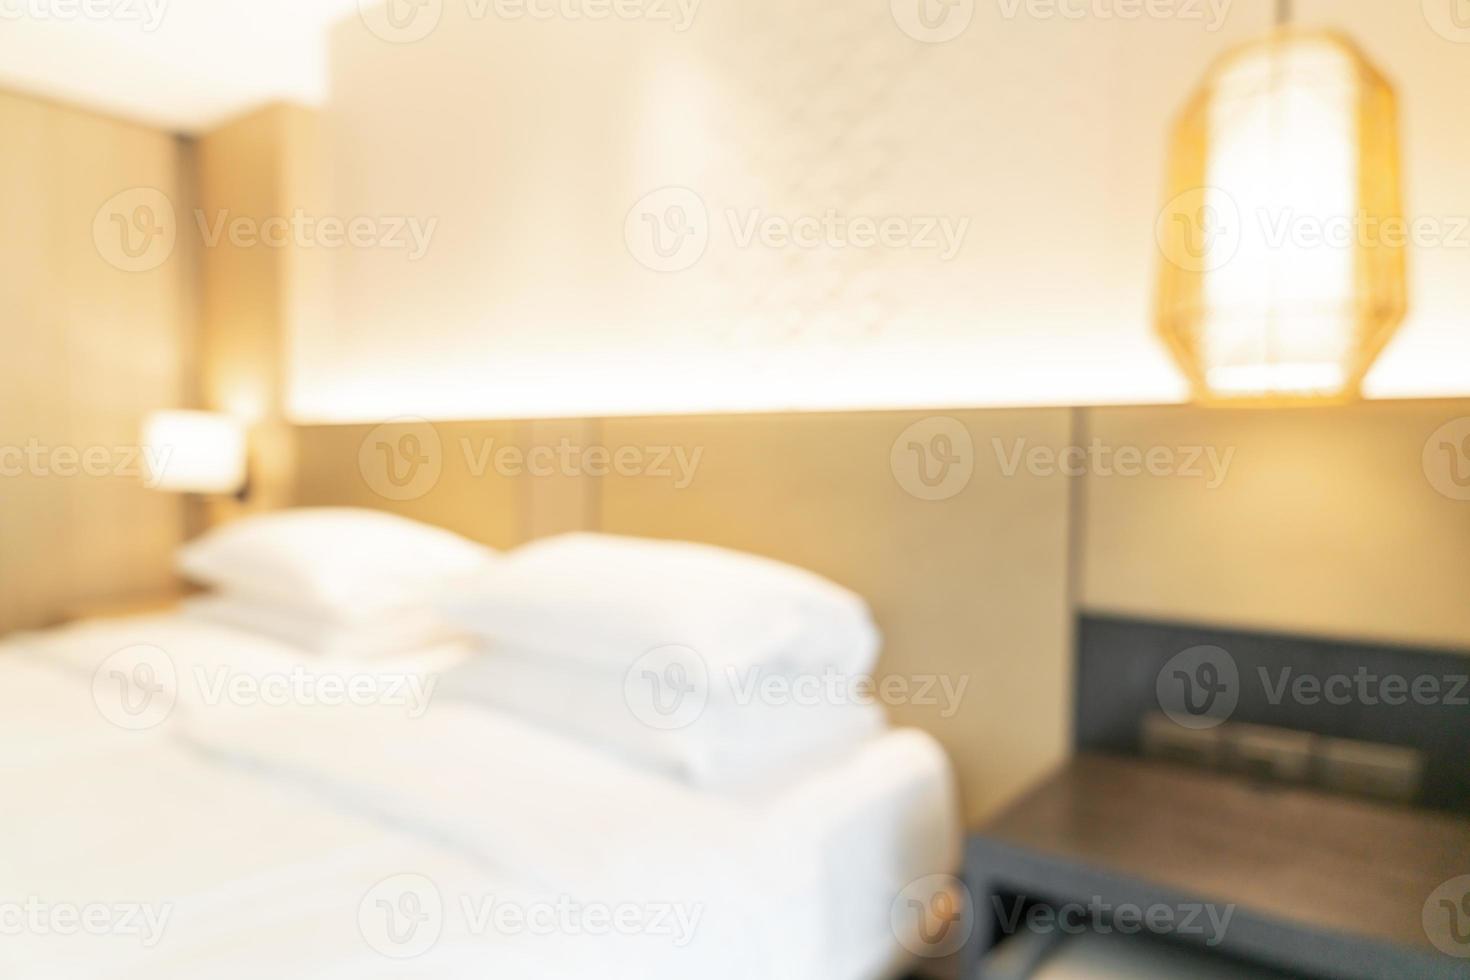 desfoque abstrato e quarto de resort de hotel desfocado para segundo plano foto